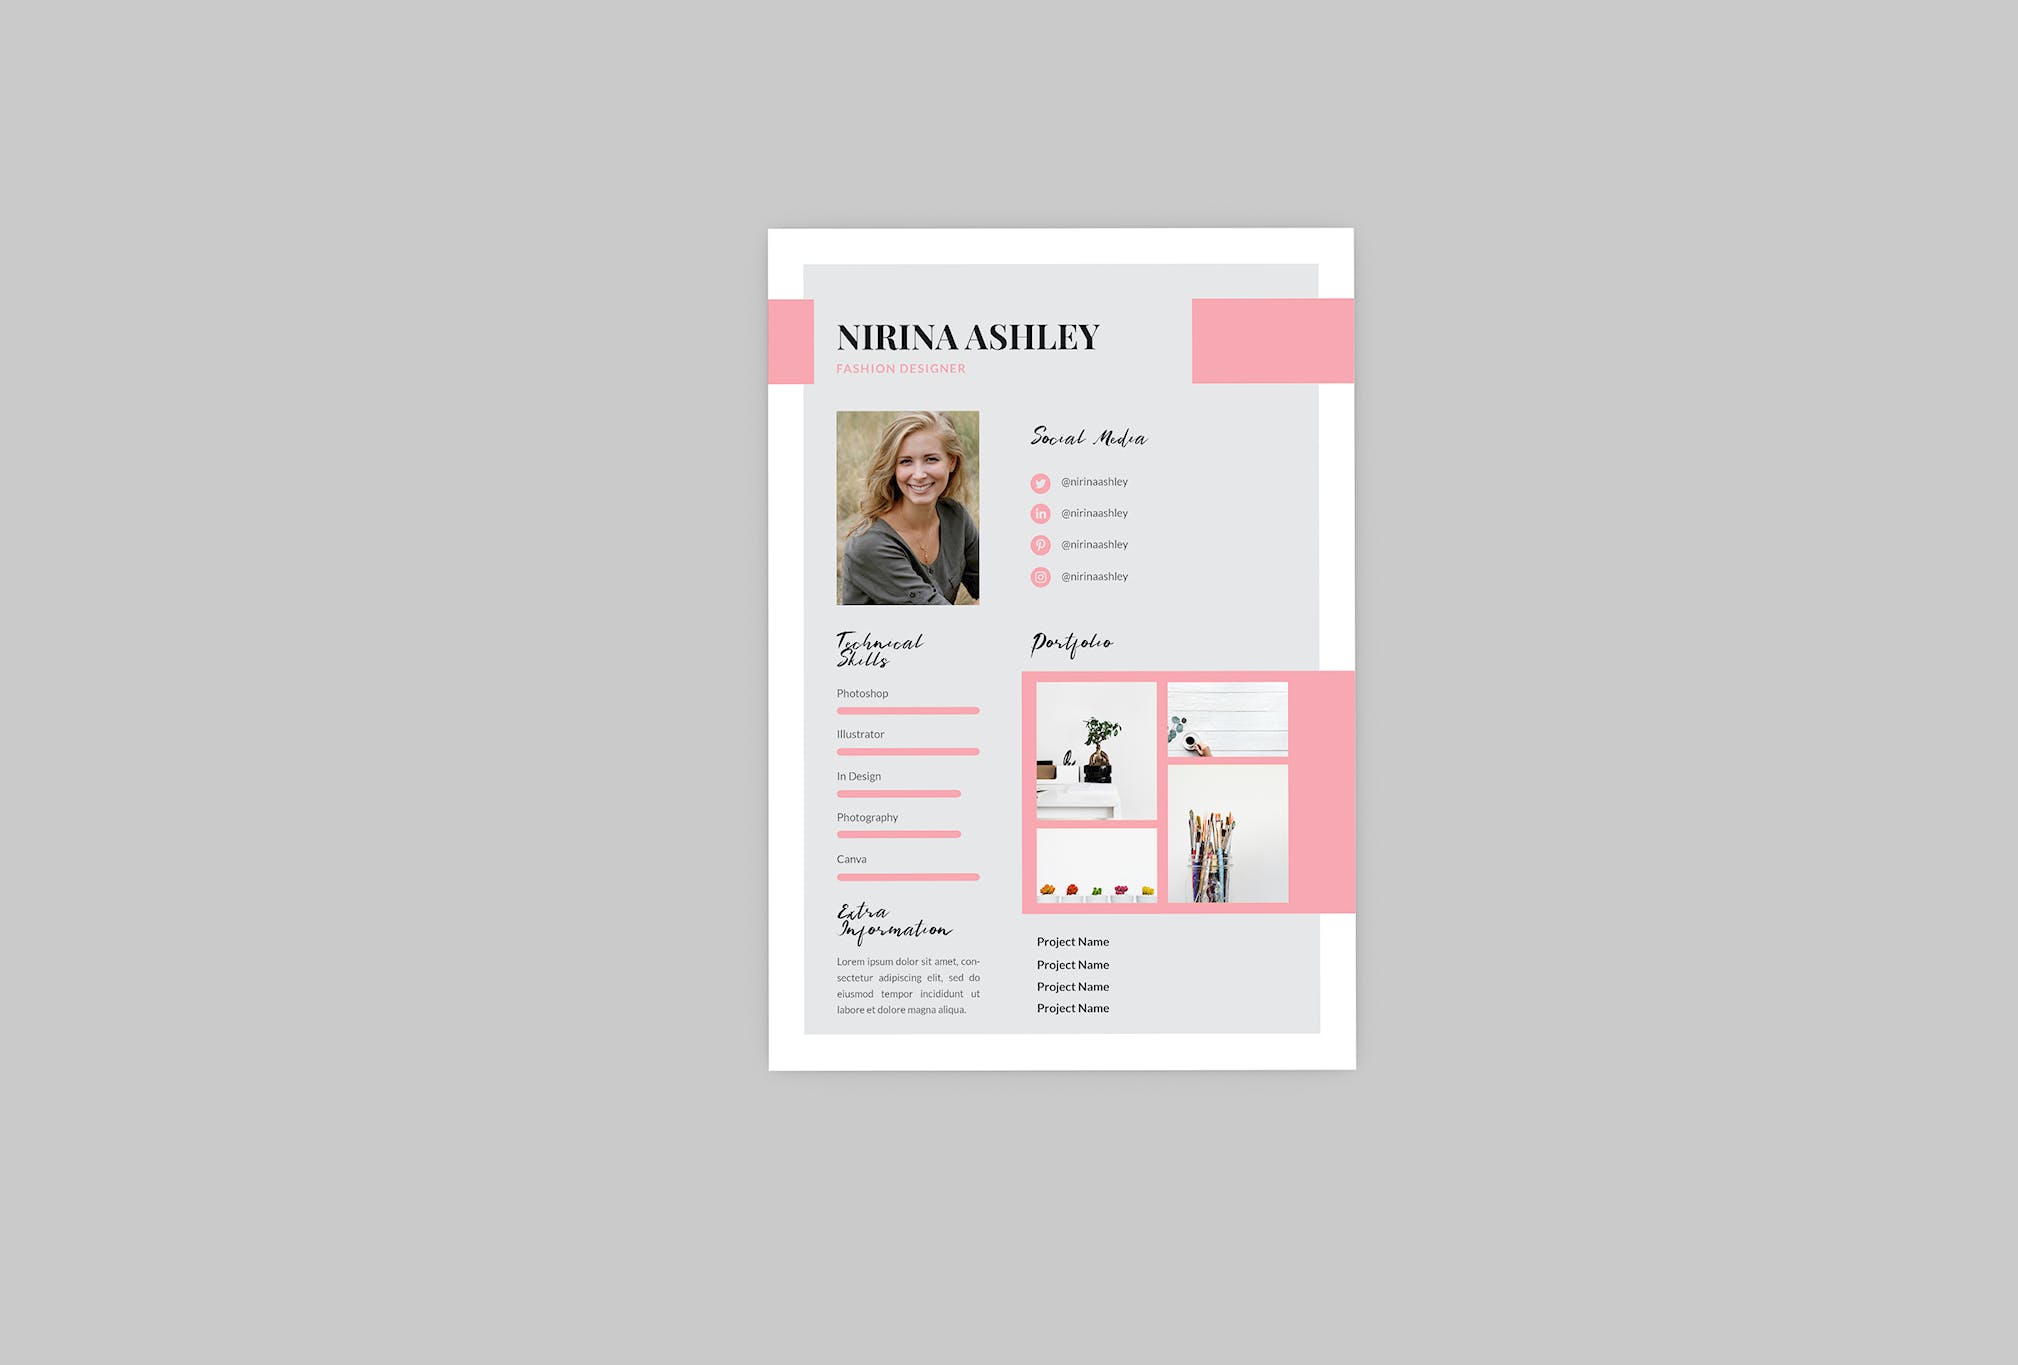 时尚编辑介绍信&素材中国精选简历模板 Nirina Fashion Resume Designer插图(3)